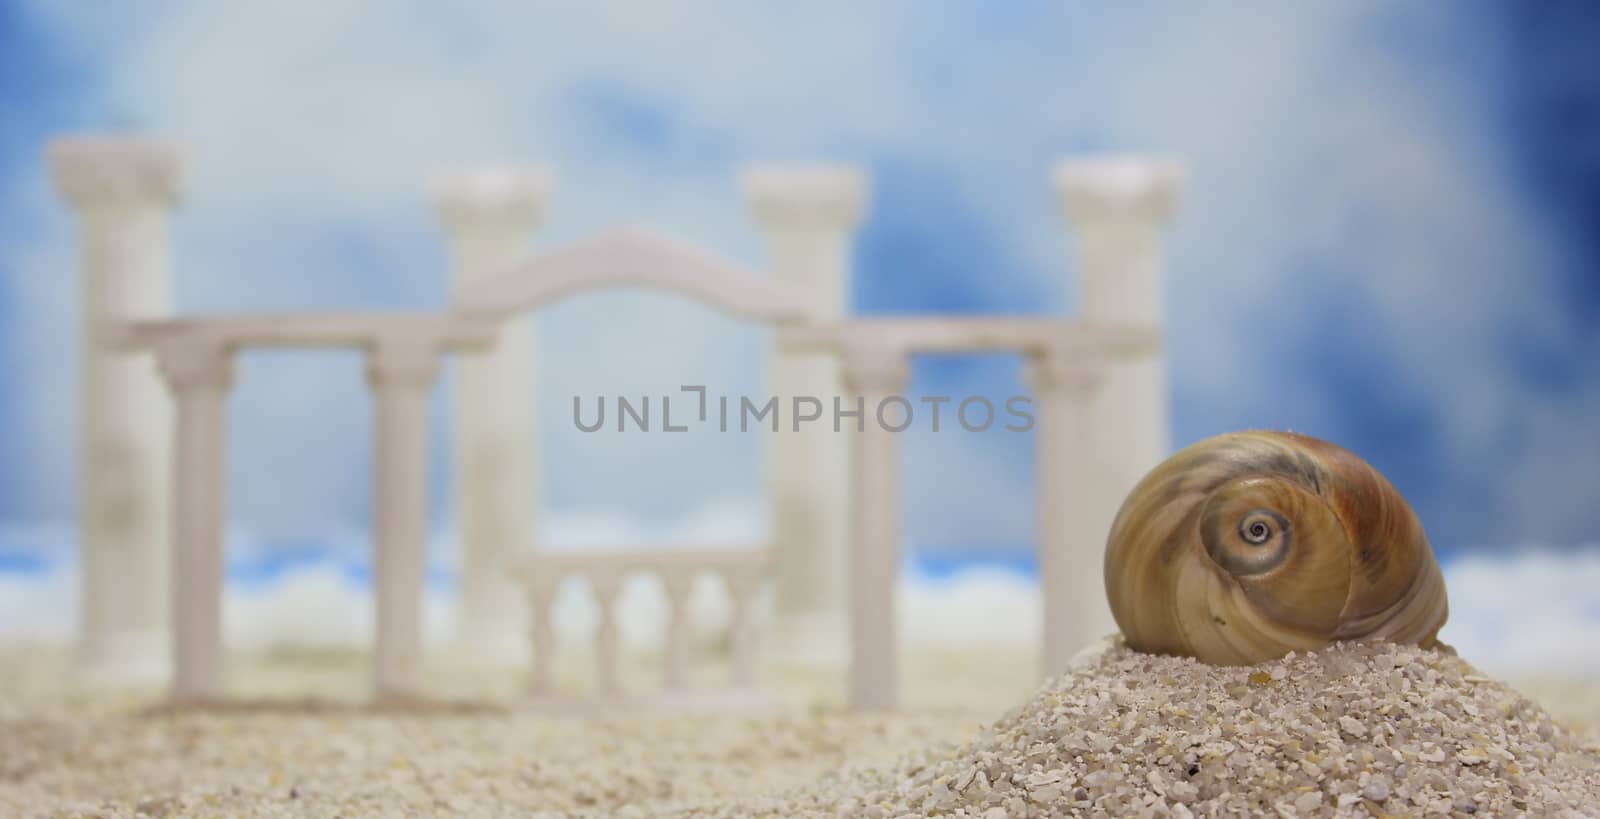 Seashell on Tropical Beach With Roman Style Ruins, Shallow DOF